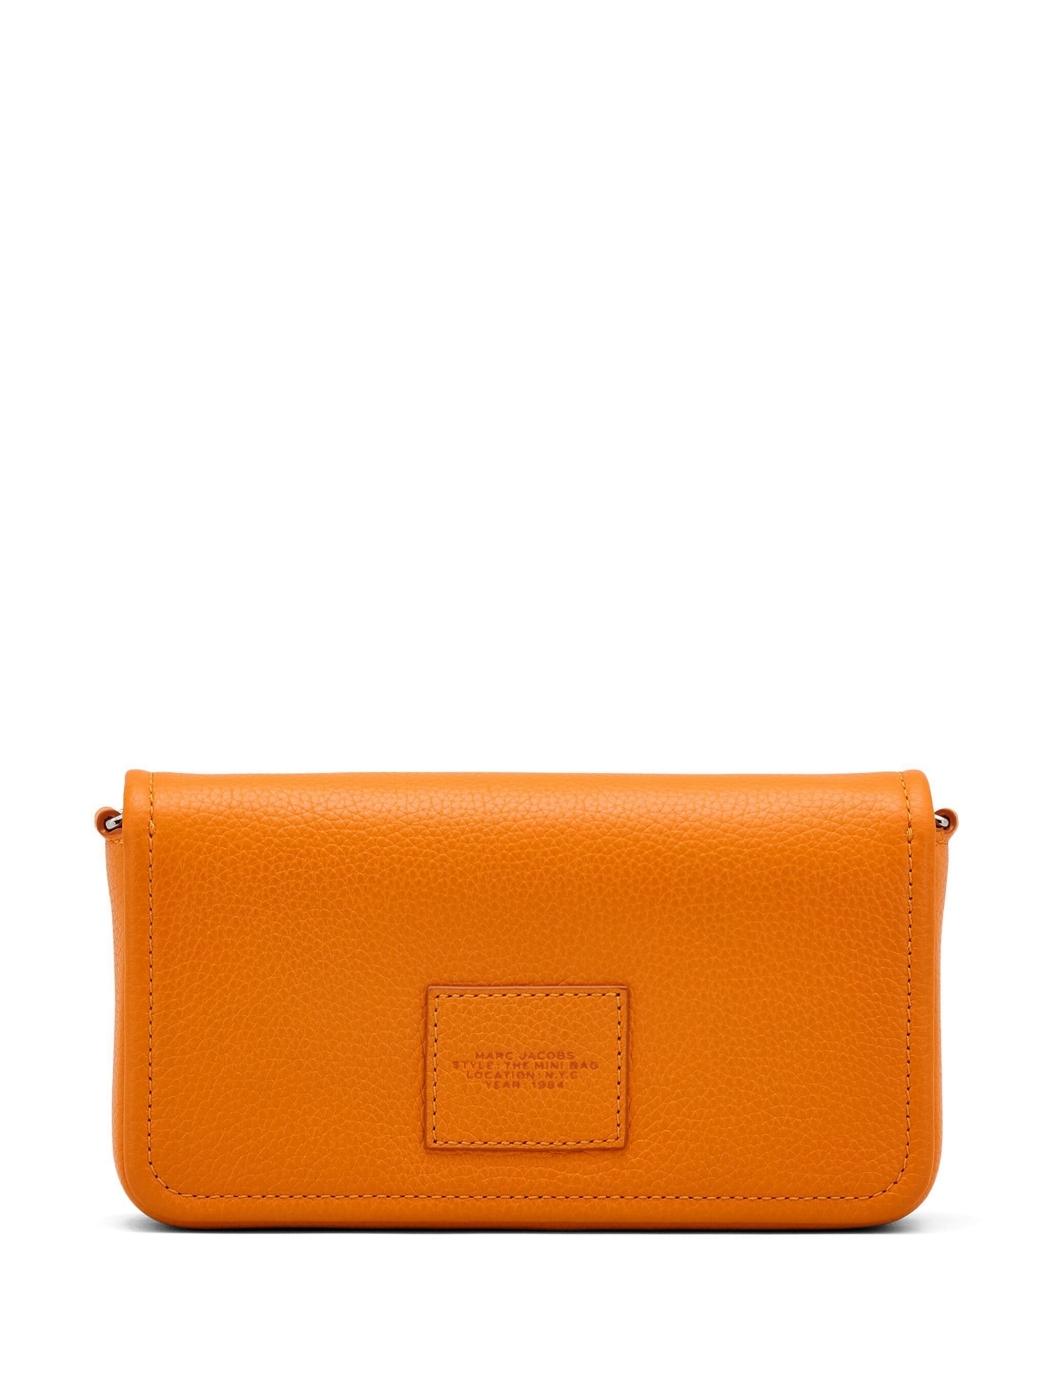 Bolso Marc Jacobs The Mini Bag Tangerine